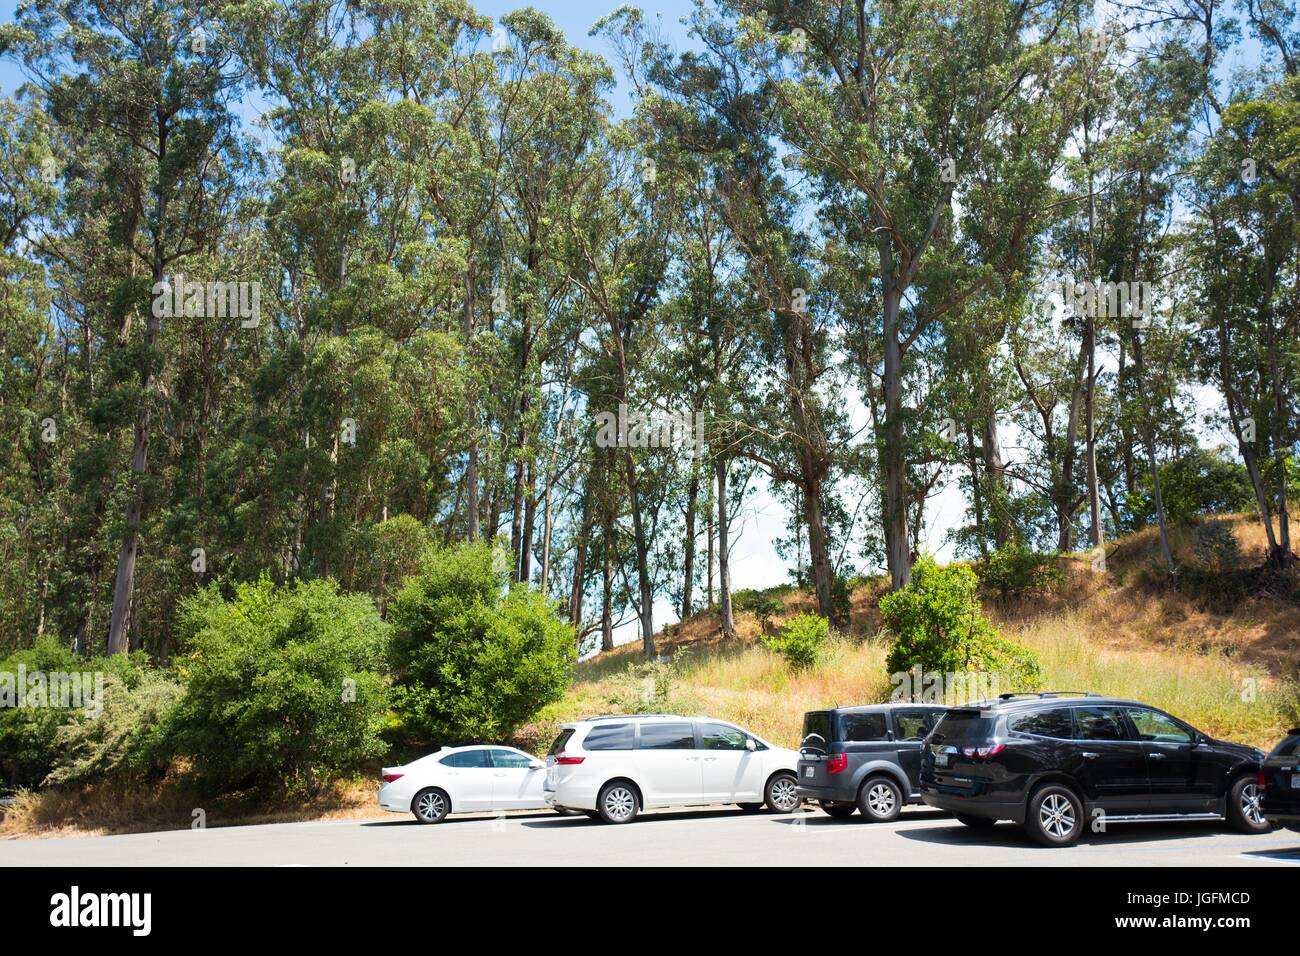 Cars are parked among tall trees in Tilden Regional Park, Berkeley, California, June 9, 2017. Stock Photo